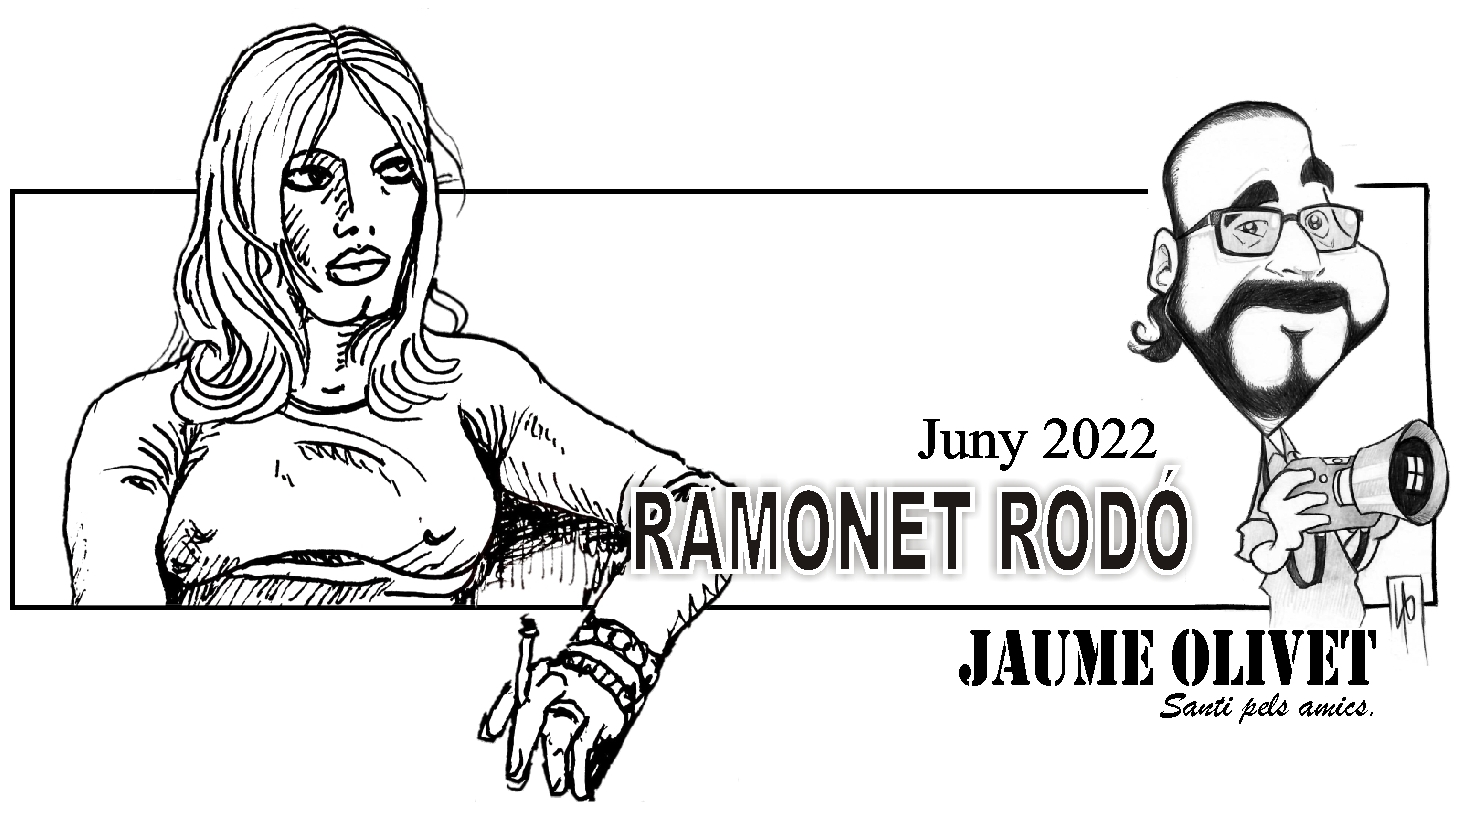  Ramonet Rod 2022